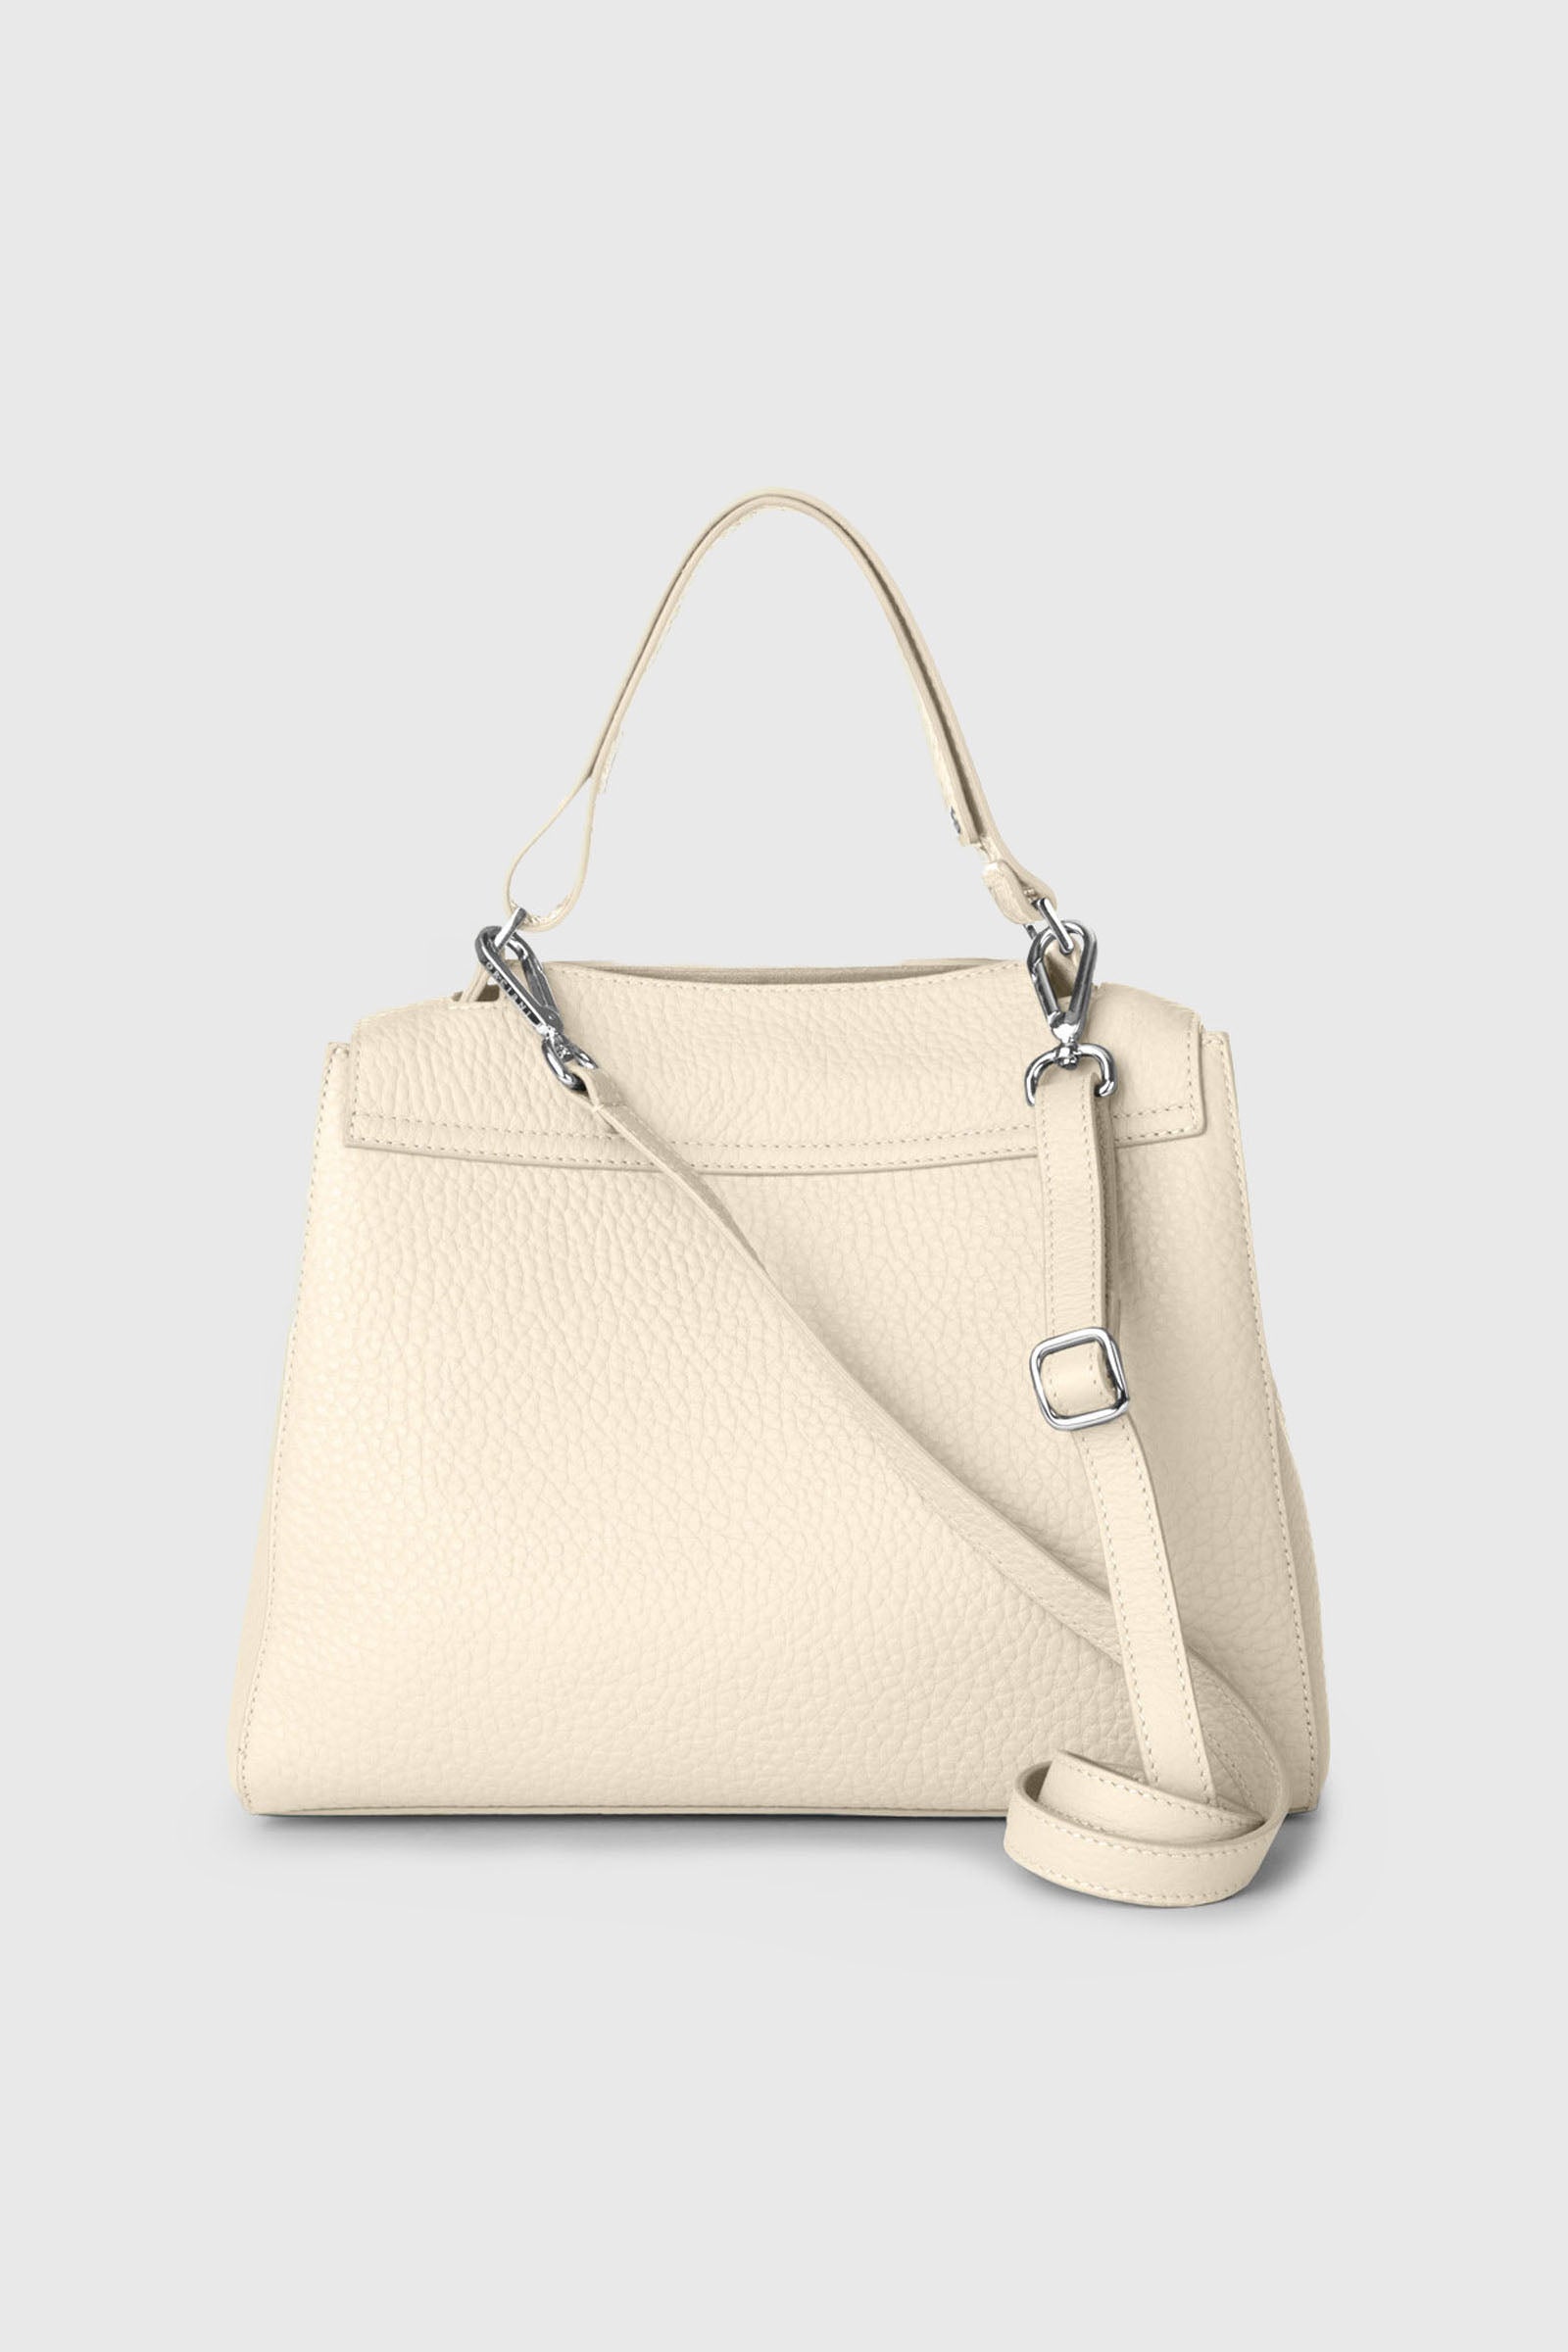 Orciani Medium Sveva Handbag in Ivory Leather - 3